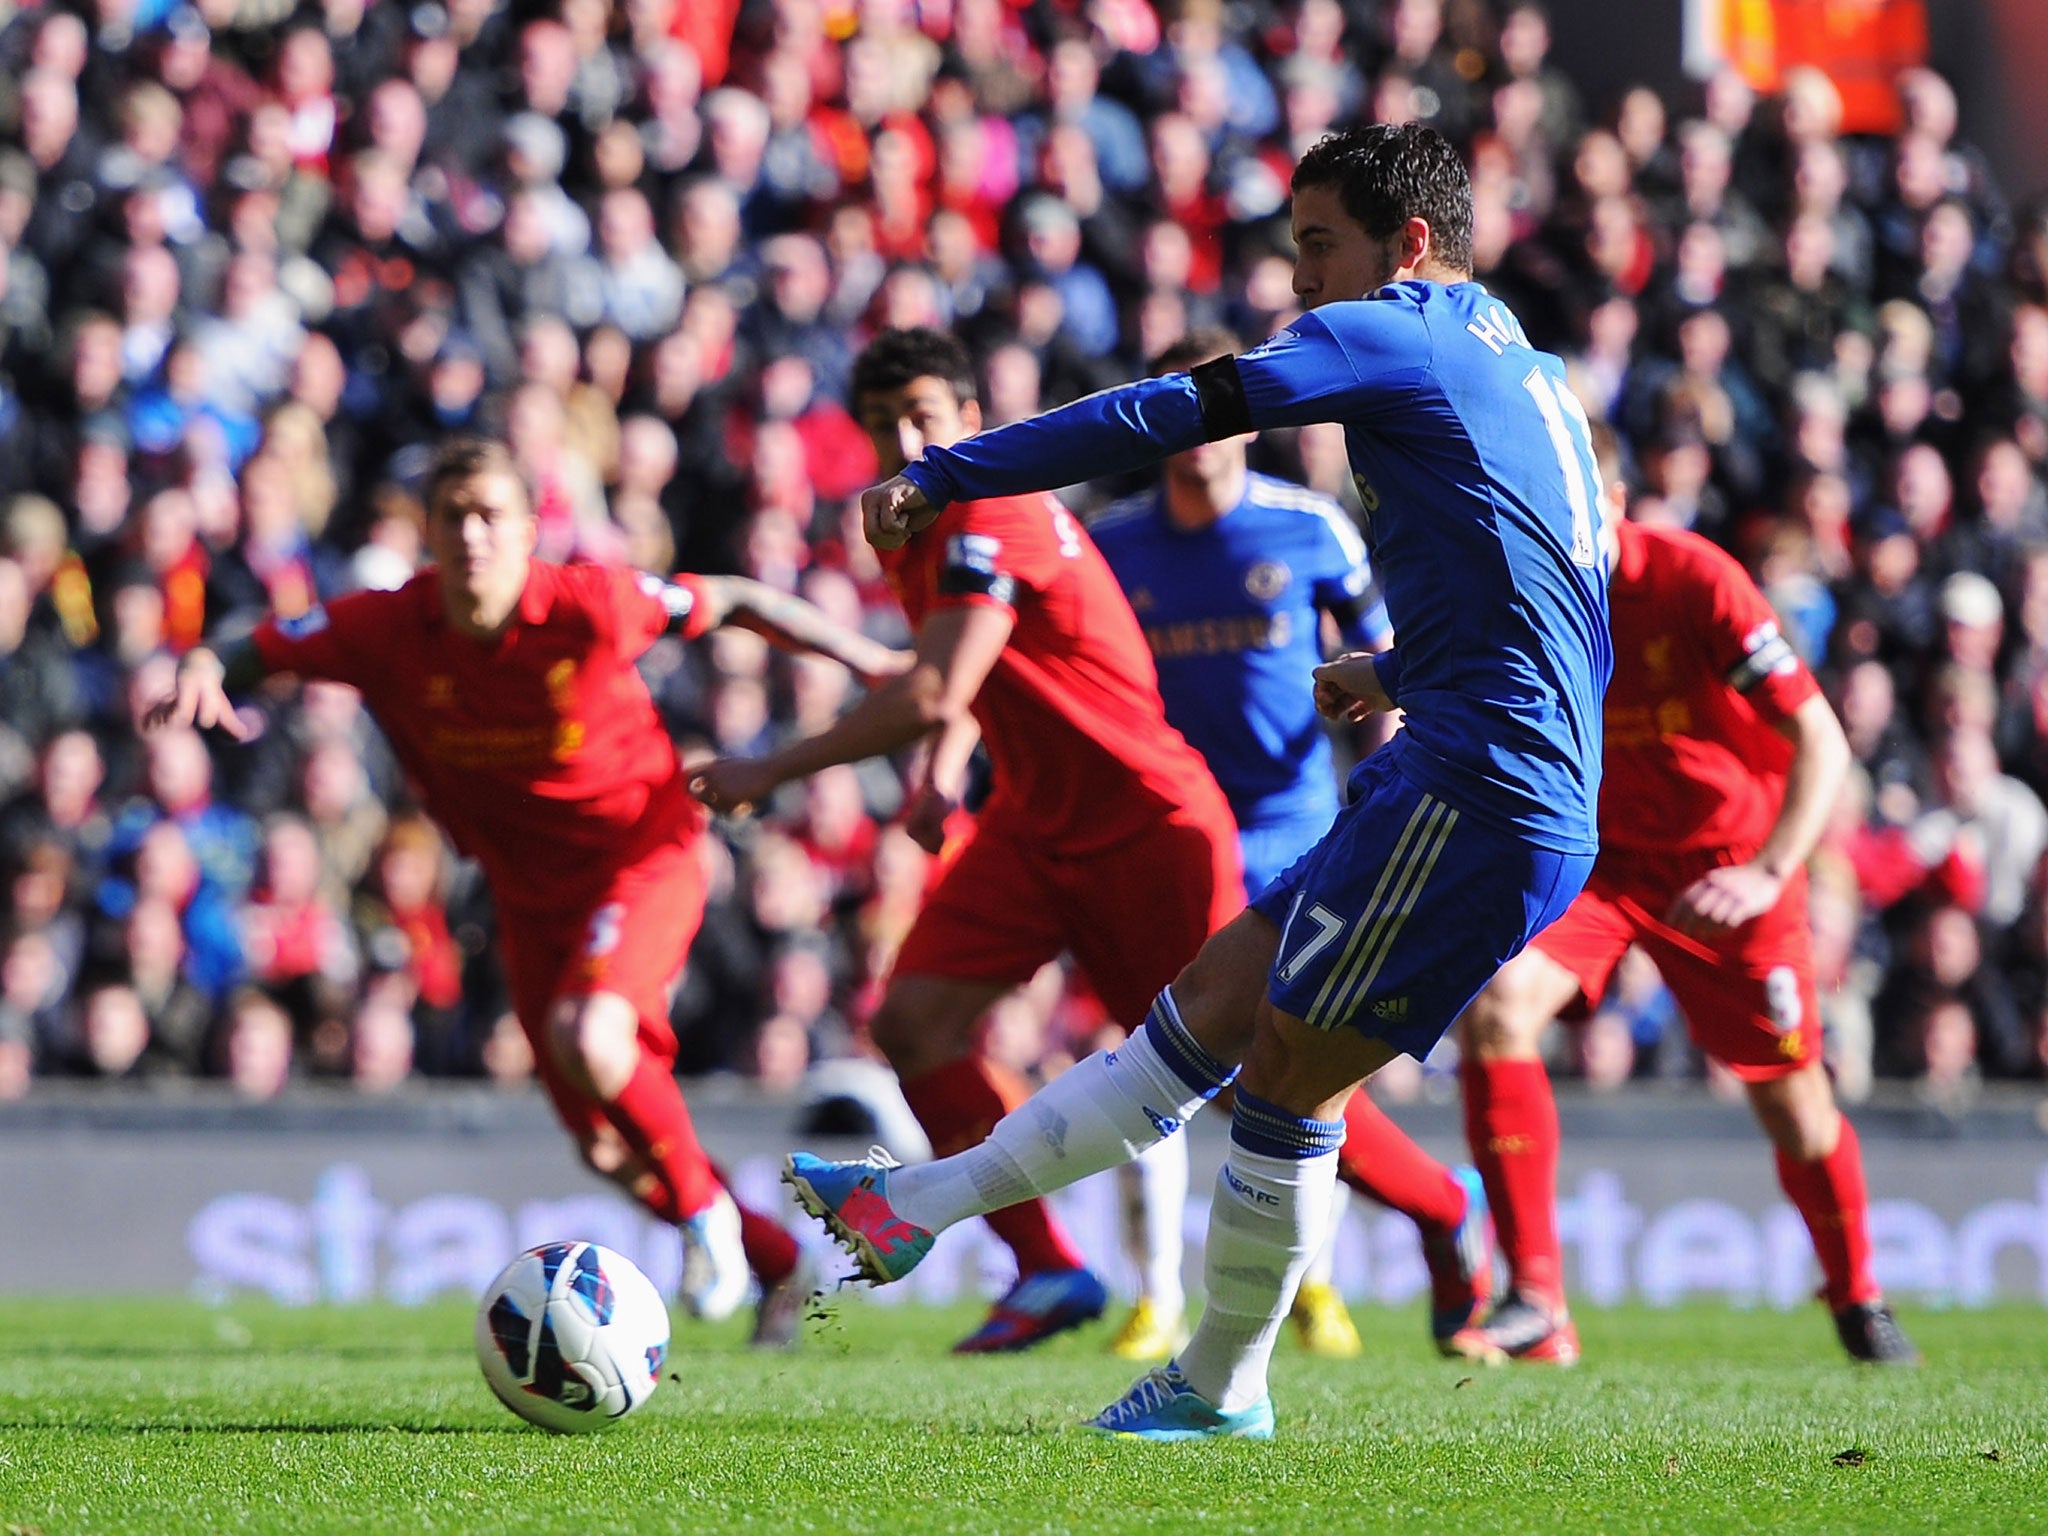 Chelsea's Eden Hazard converts from the penalty spot